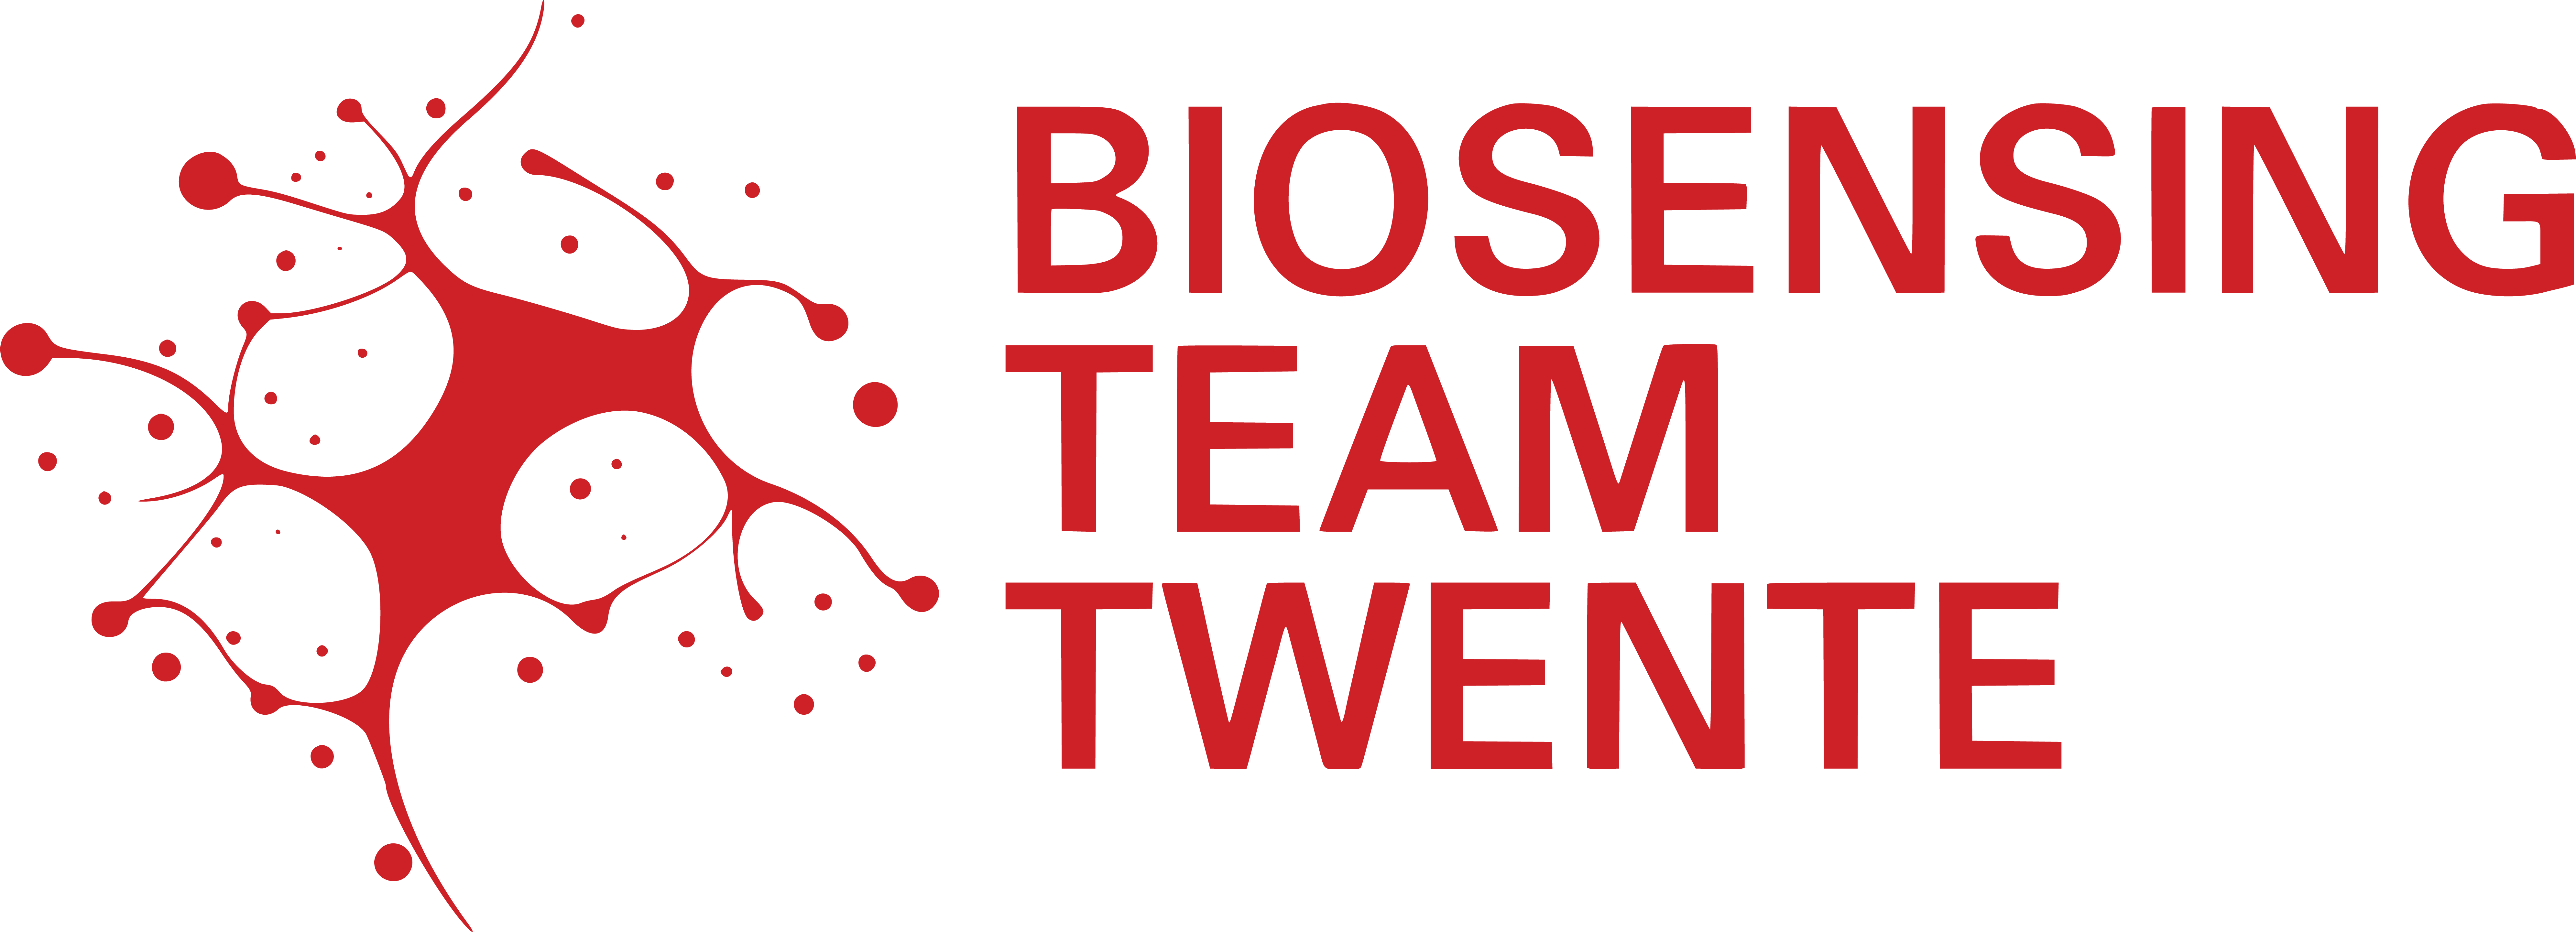 Biosensing Team Twente